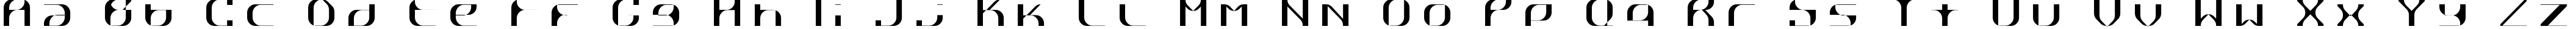 Пример написания английского алфавита шрифтом Rеttpick